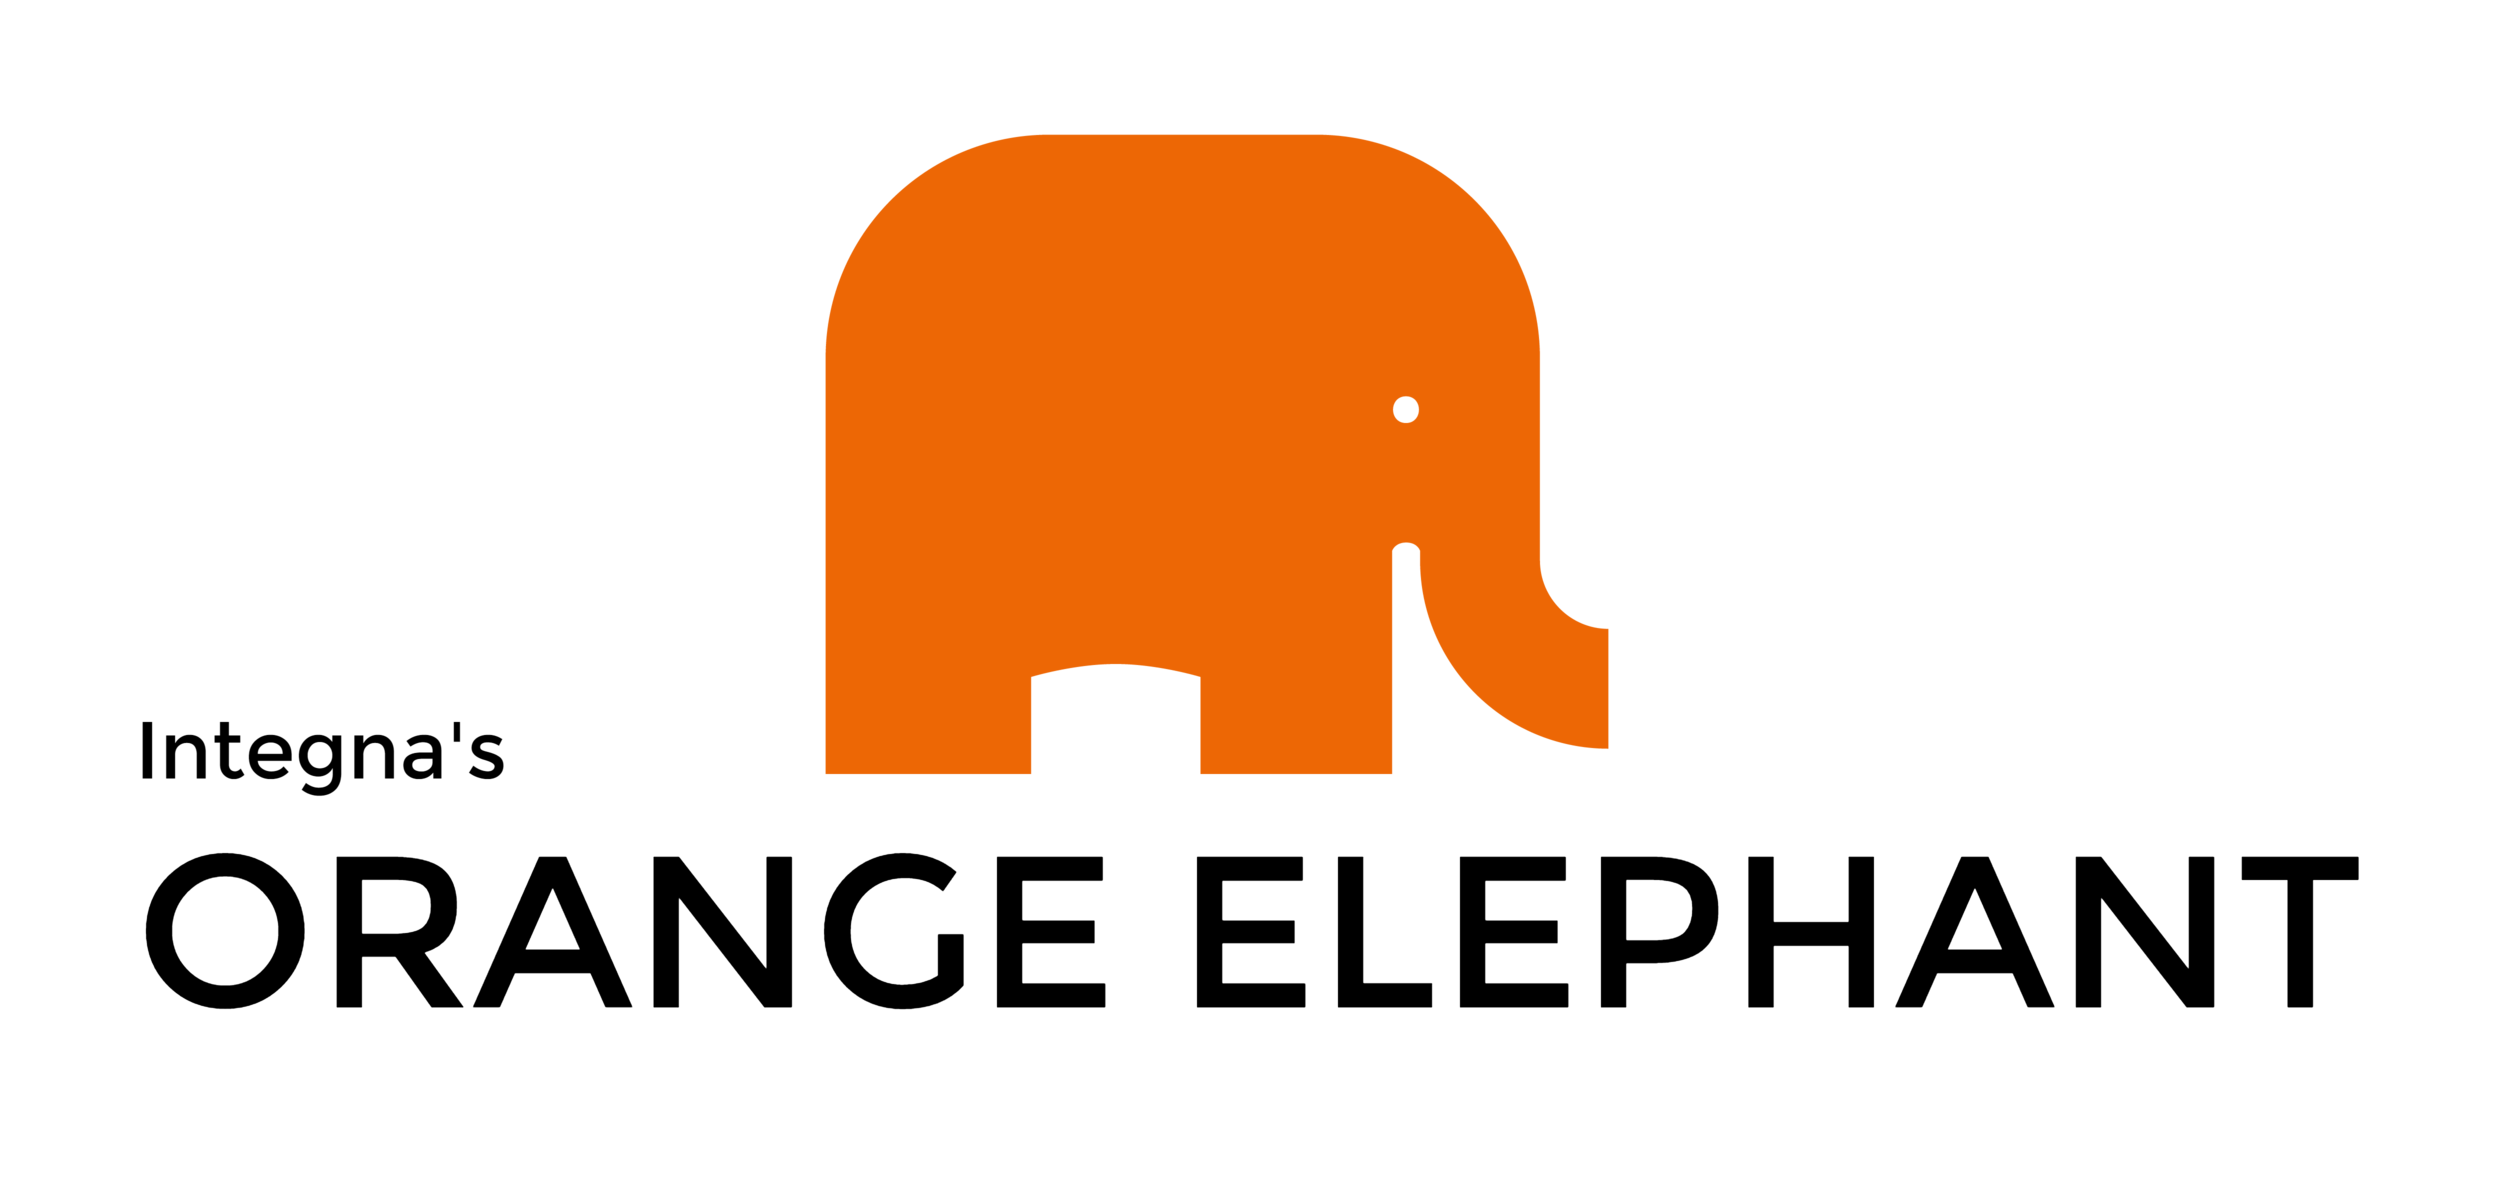 Логотип Элефант. Orange Elephant Armenia. Оранж Элефант Медиа. Orange elephant